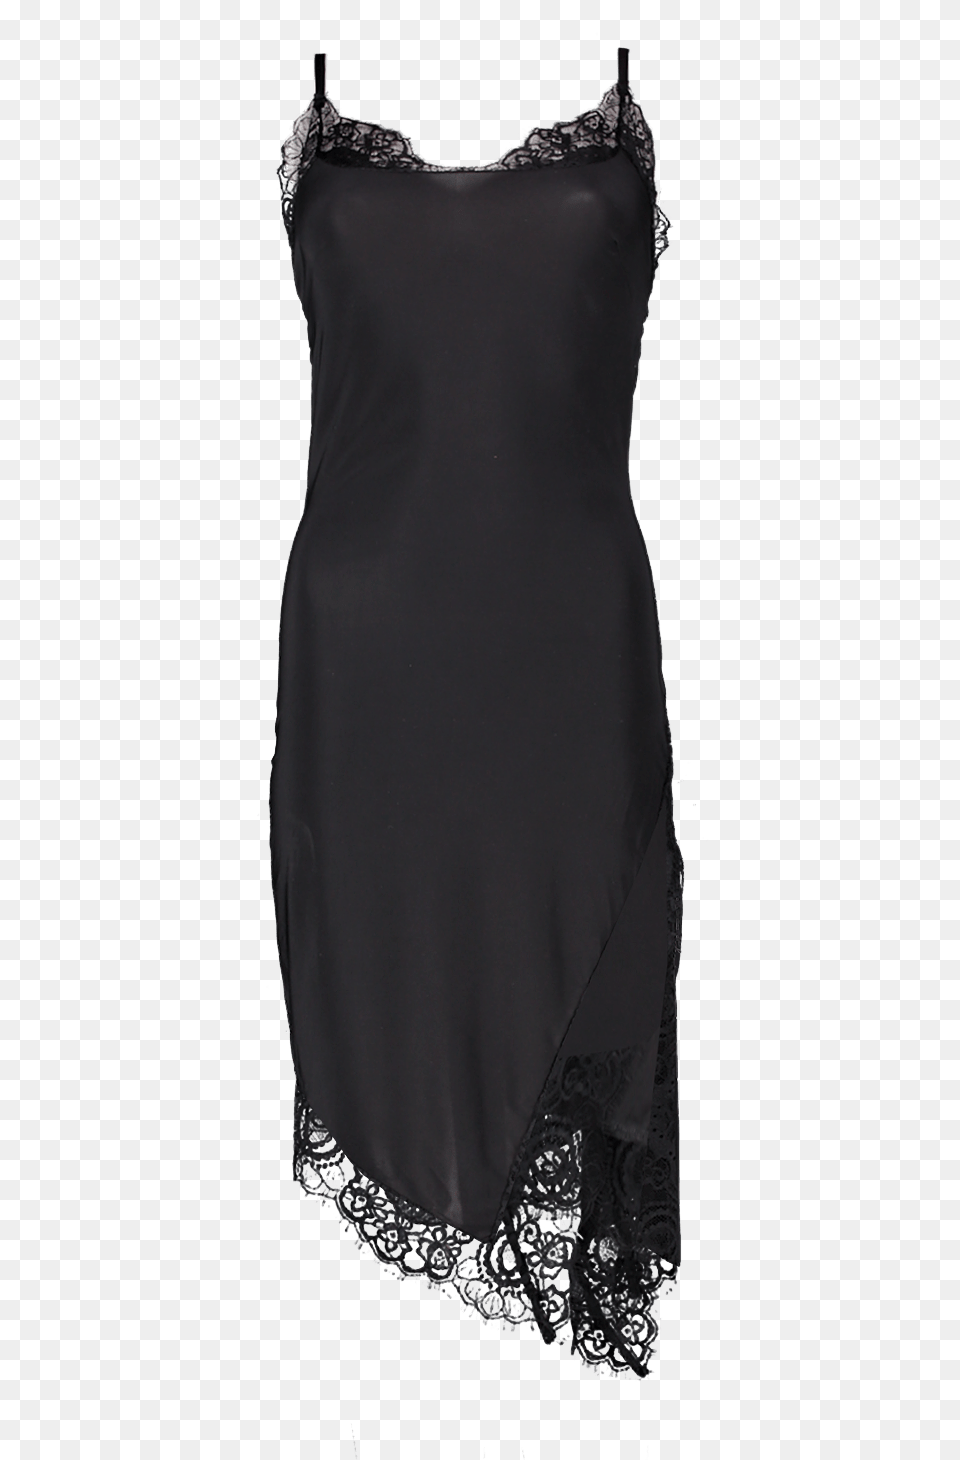 Related Little Black Dress, Clothing, Formal Wear, Evening Dress Png